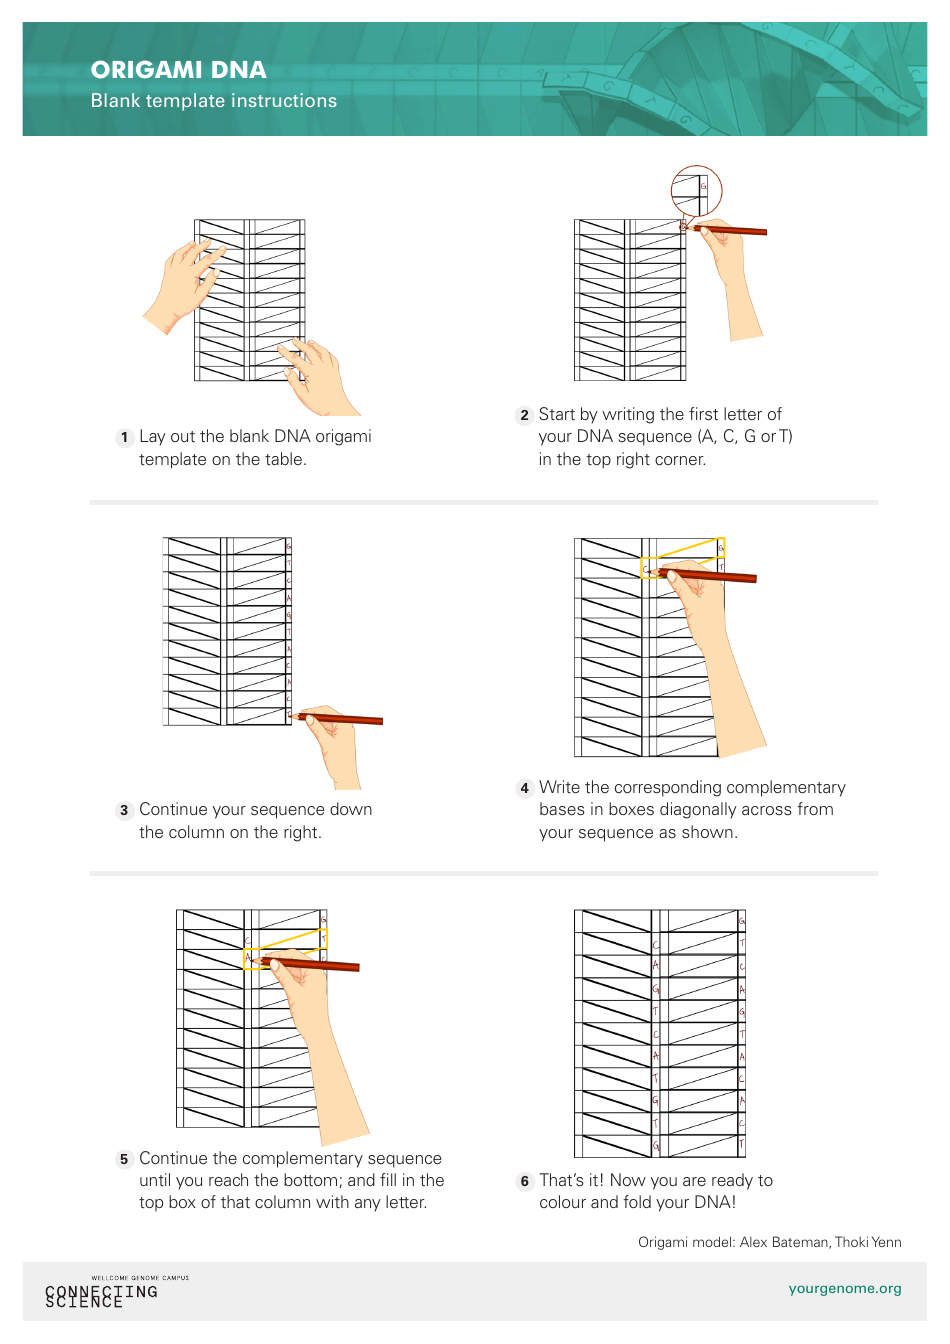 Origami*DNA Taxonomy Classification Diagram as a Helpful Biology Study Aid